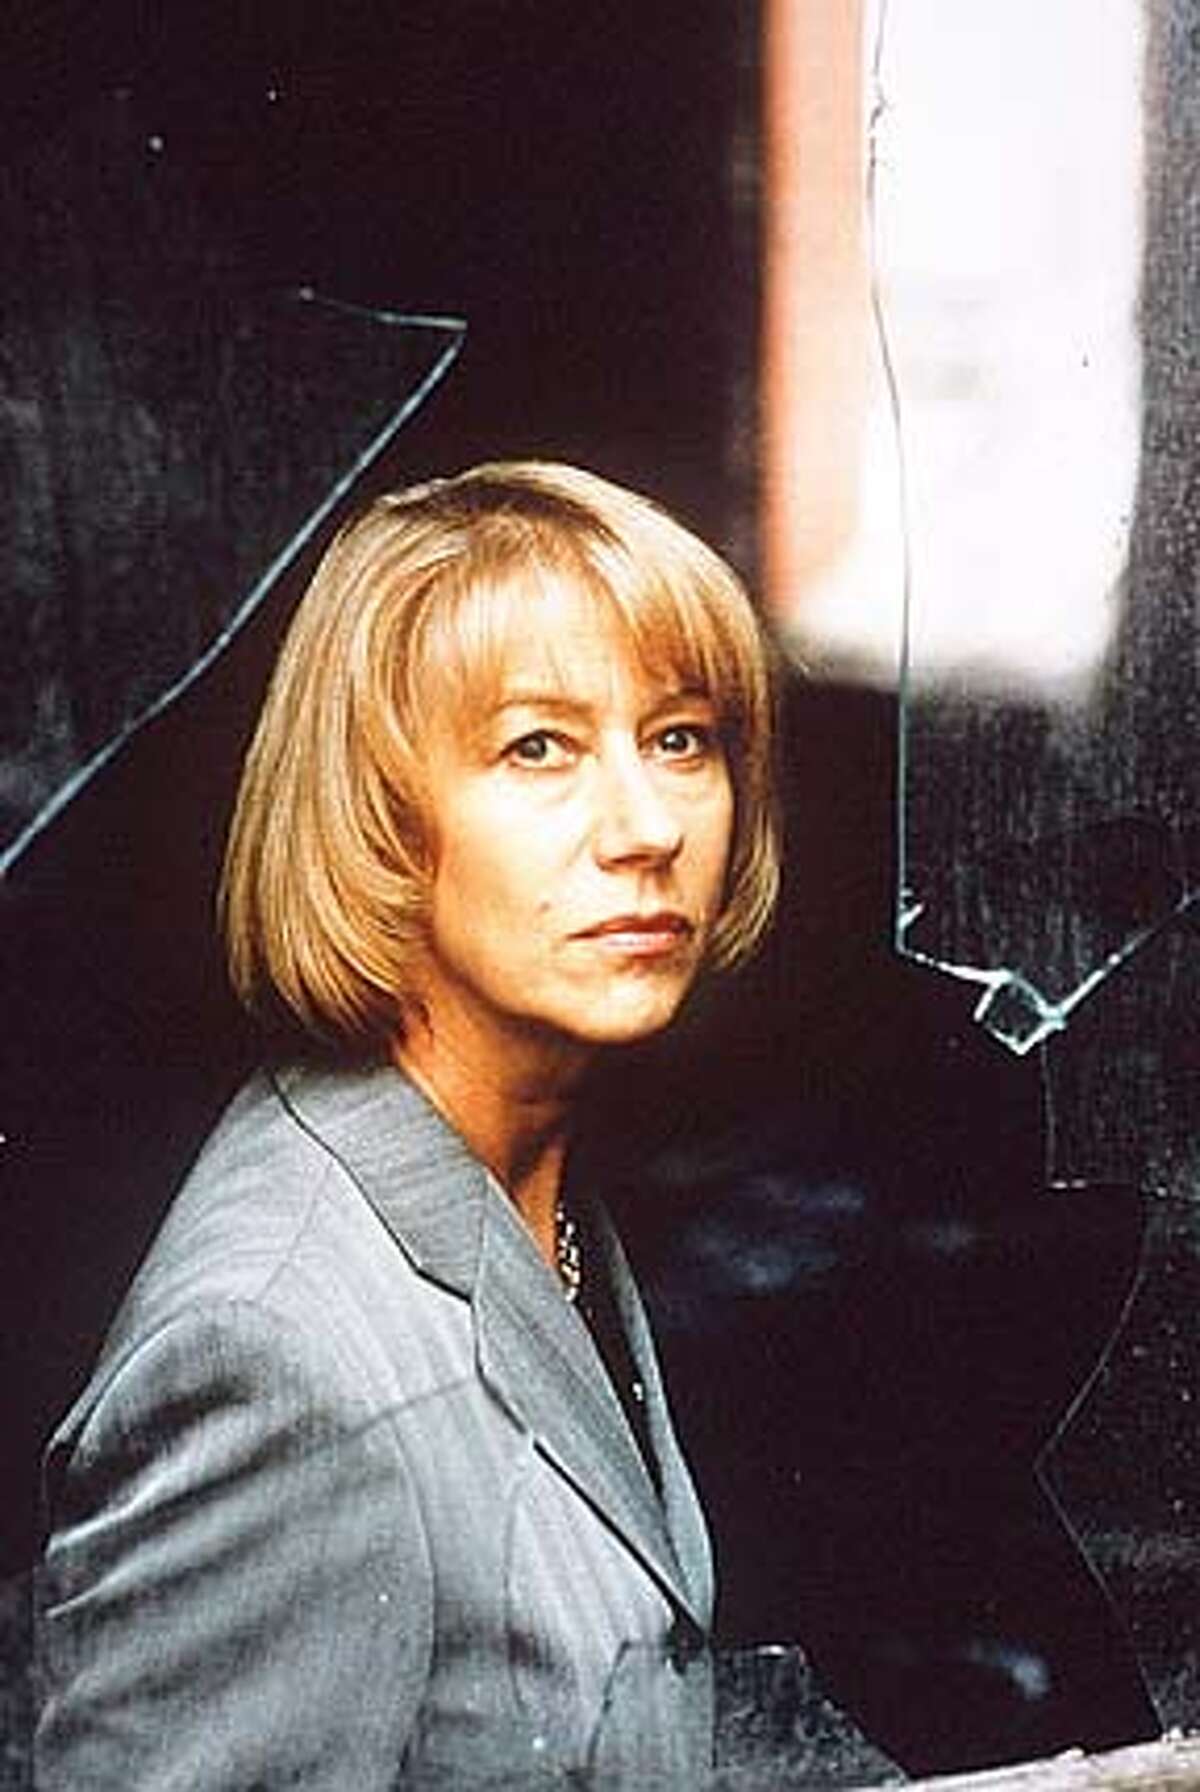 MOBIL MASTERPIECE THEATRE= TV SERIES: "ERRORS OF JUDGEMENT" WITH HELEN MIRREN returns as detective Jane Tennison in "Prime Suspect 5.' ALSO RAN: 04/12/1999, 6/14/99 CAT